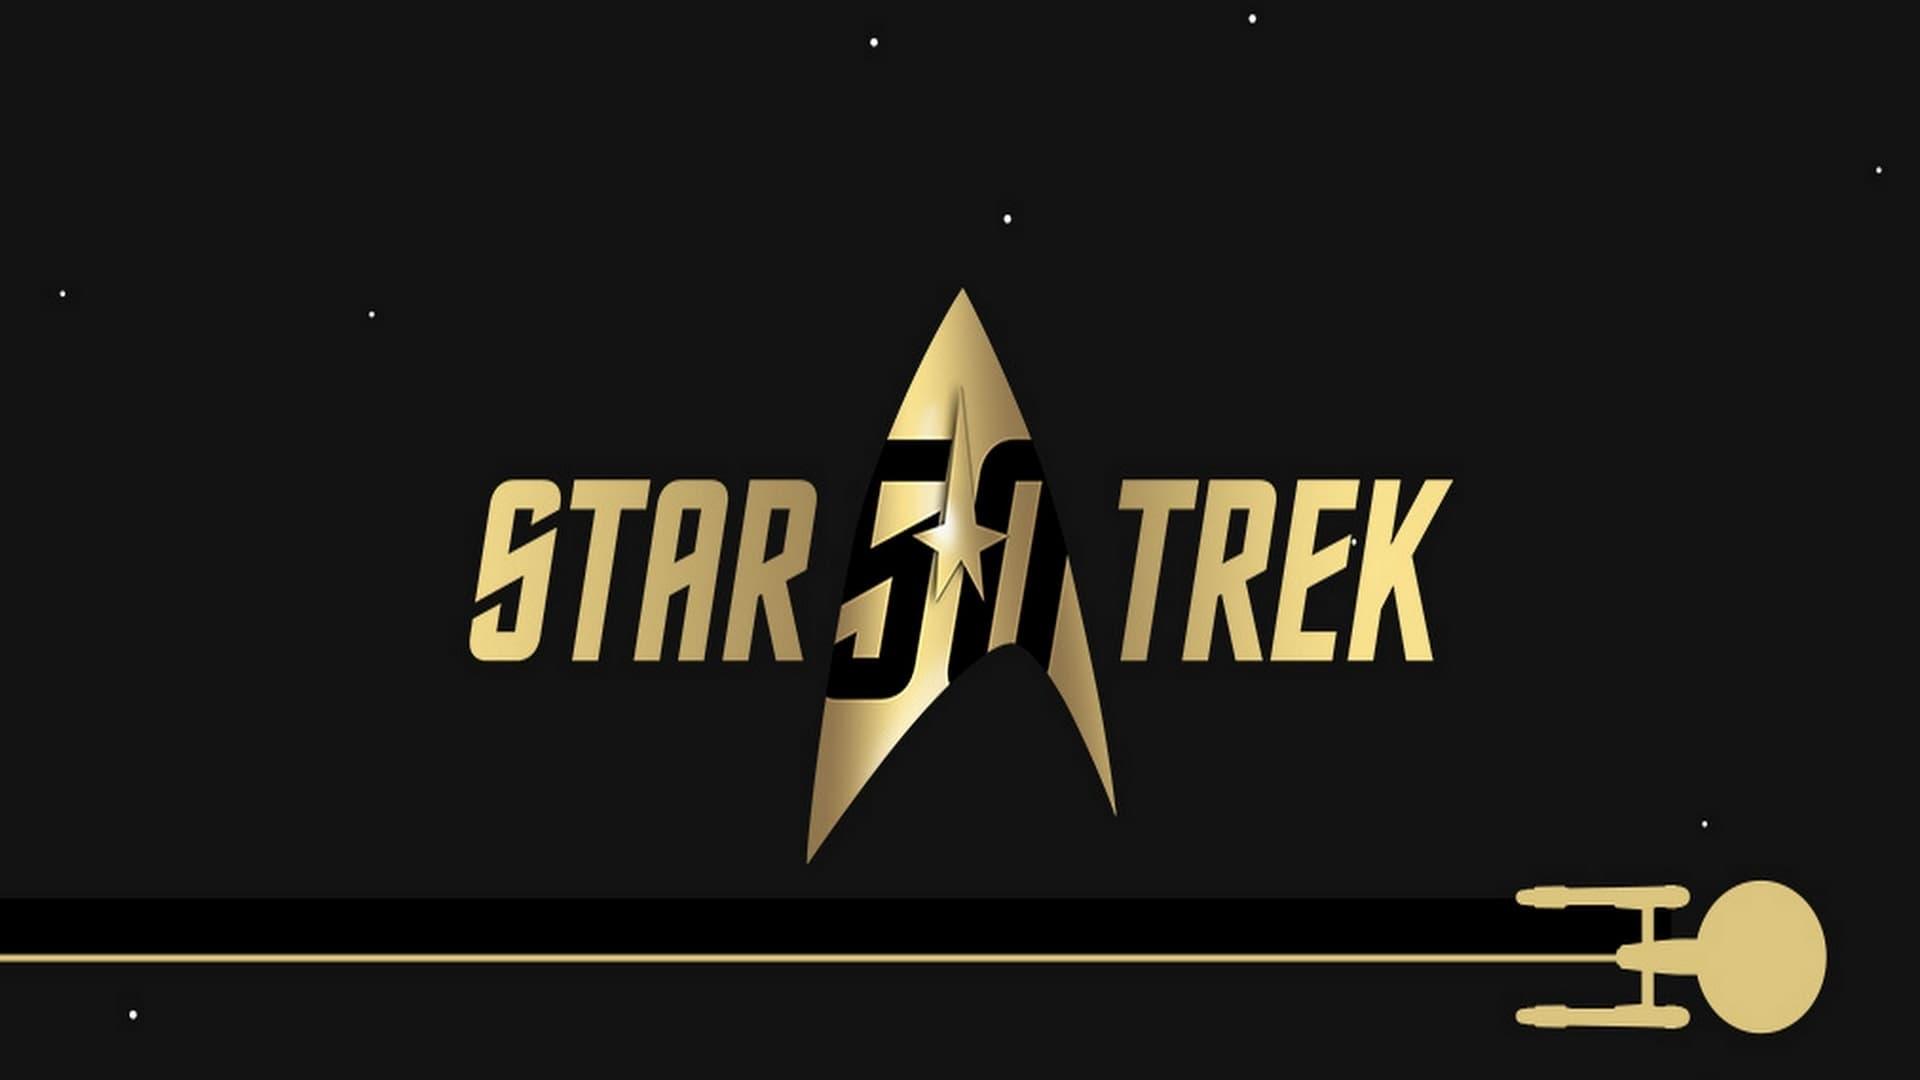 50 Years of Star Trek backdrop